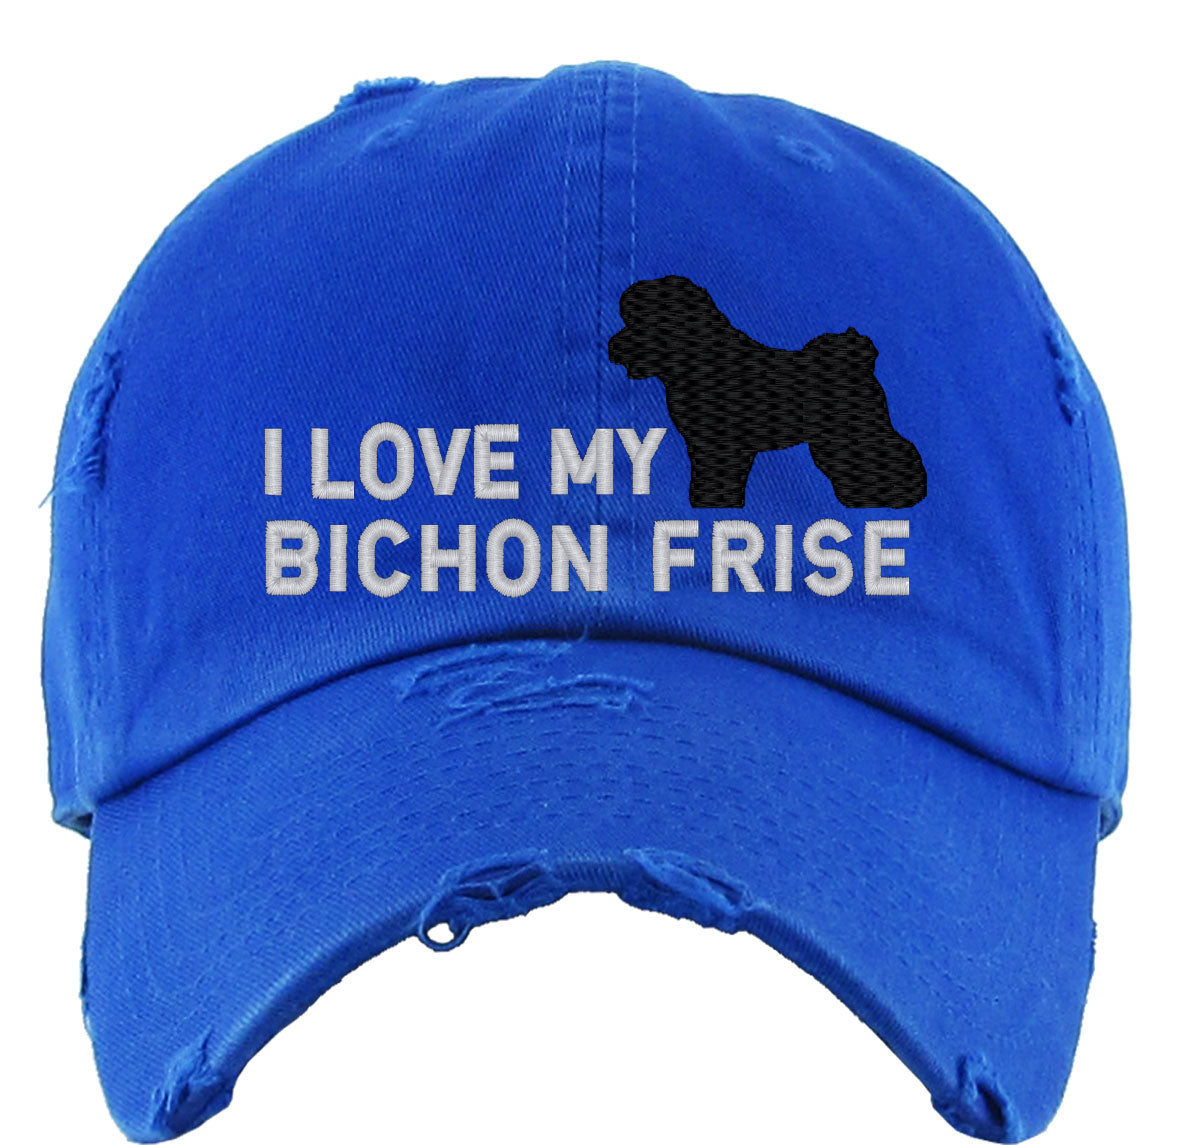 I Love My Bichon Frise Dog Vintage Baseball Cap